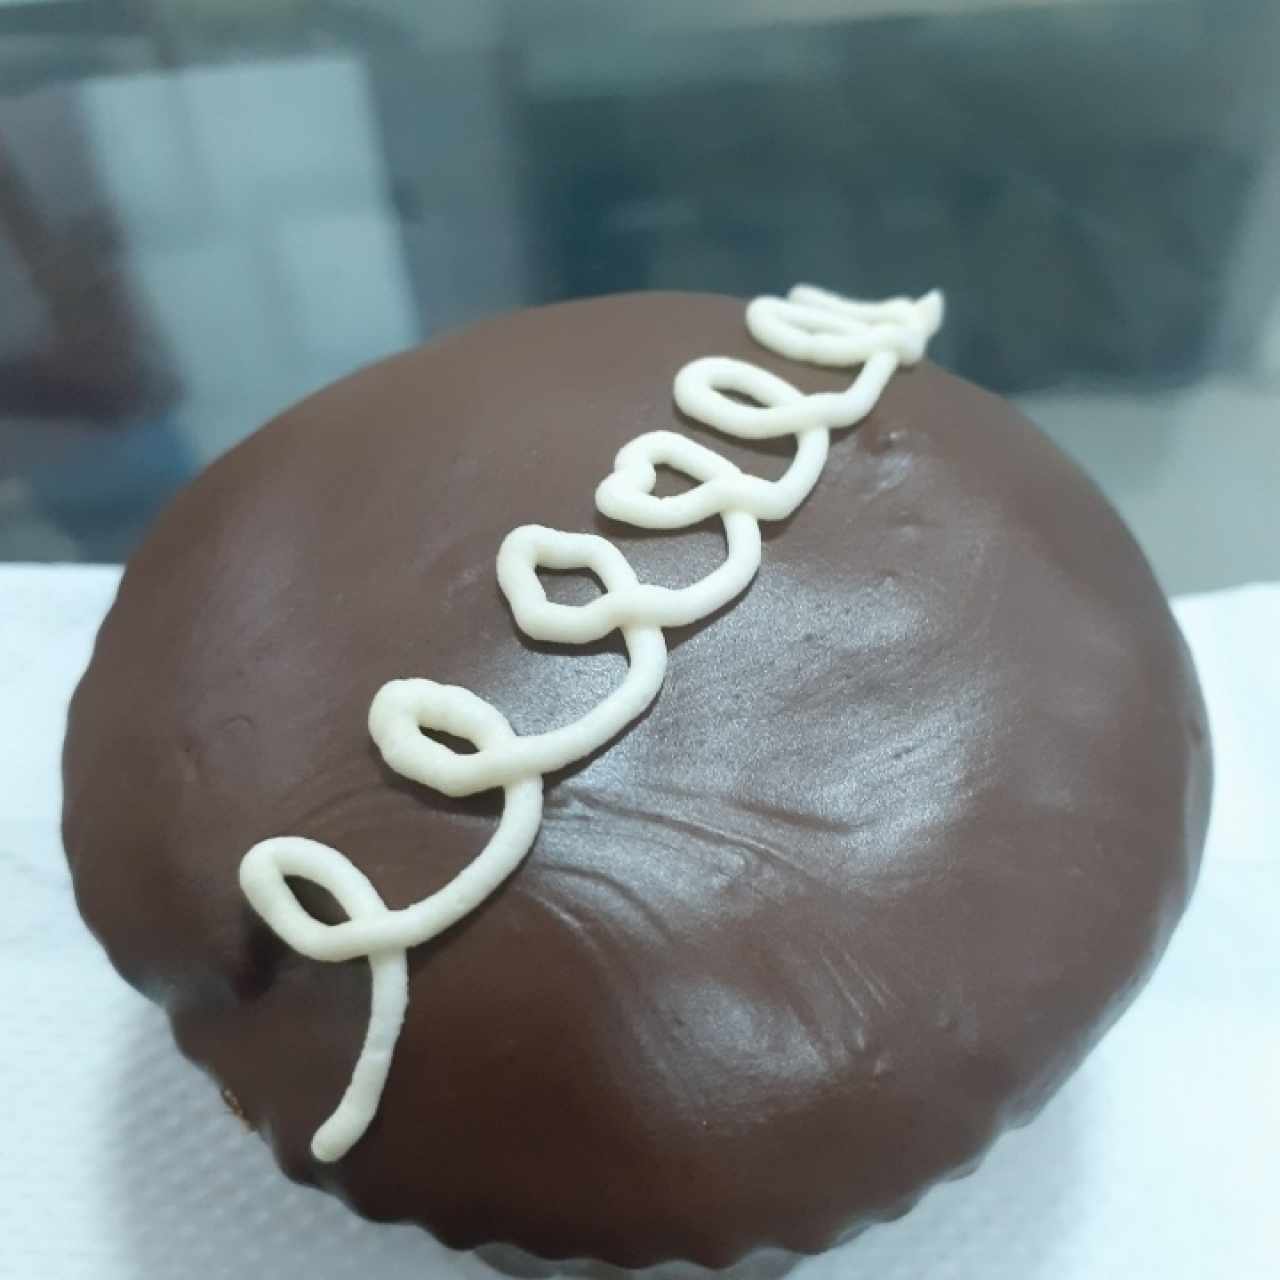 Cupcake de Chocolate 